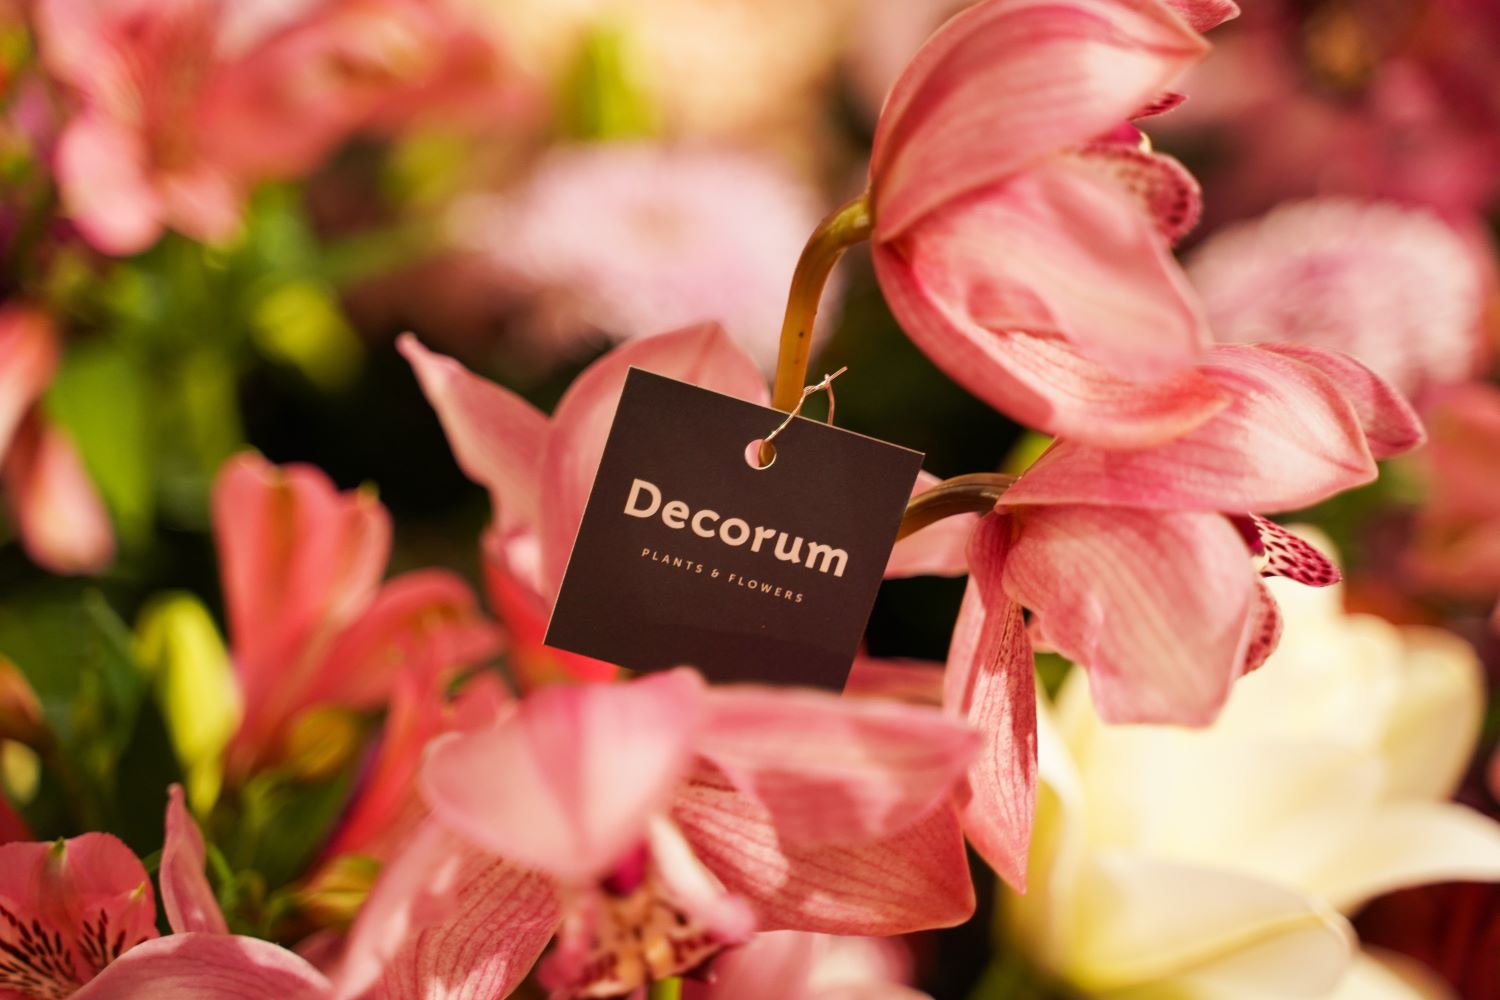 Decorum product